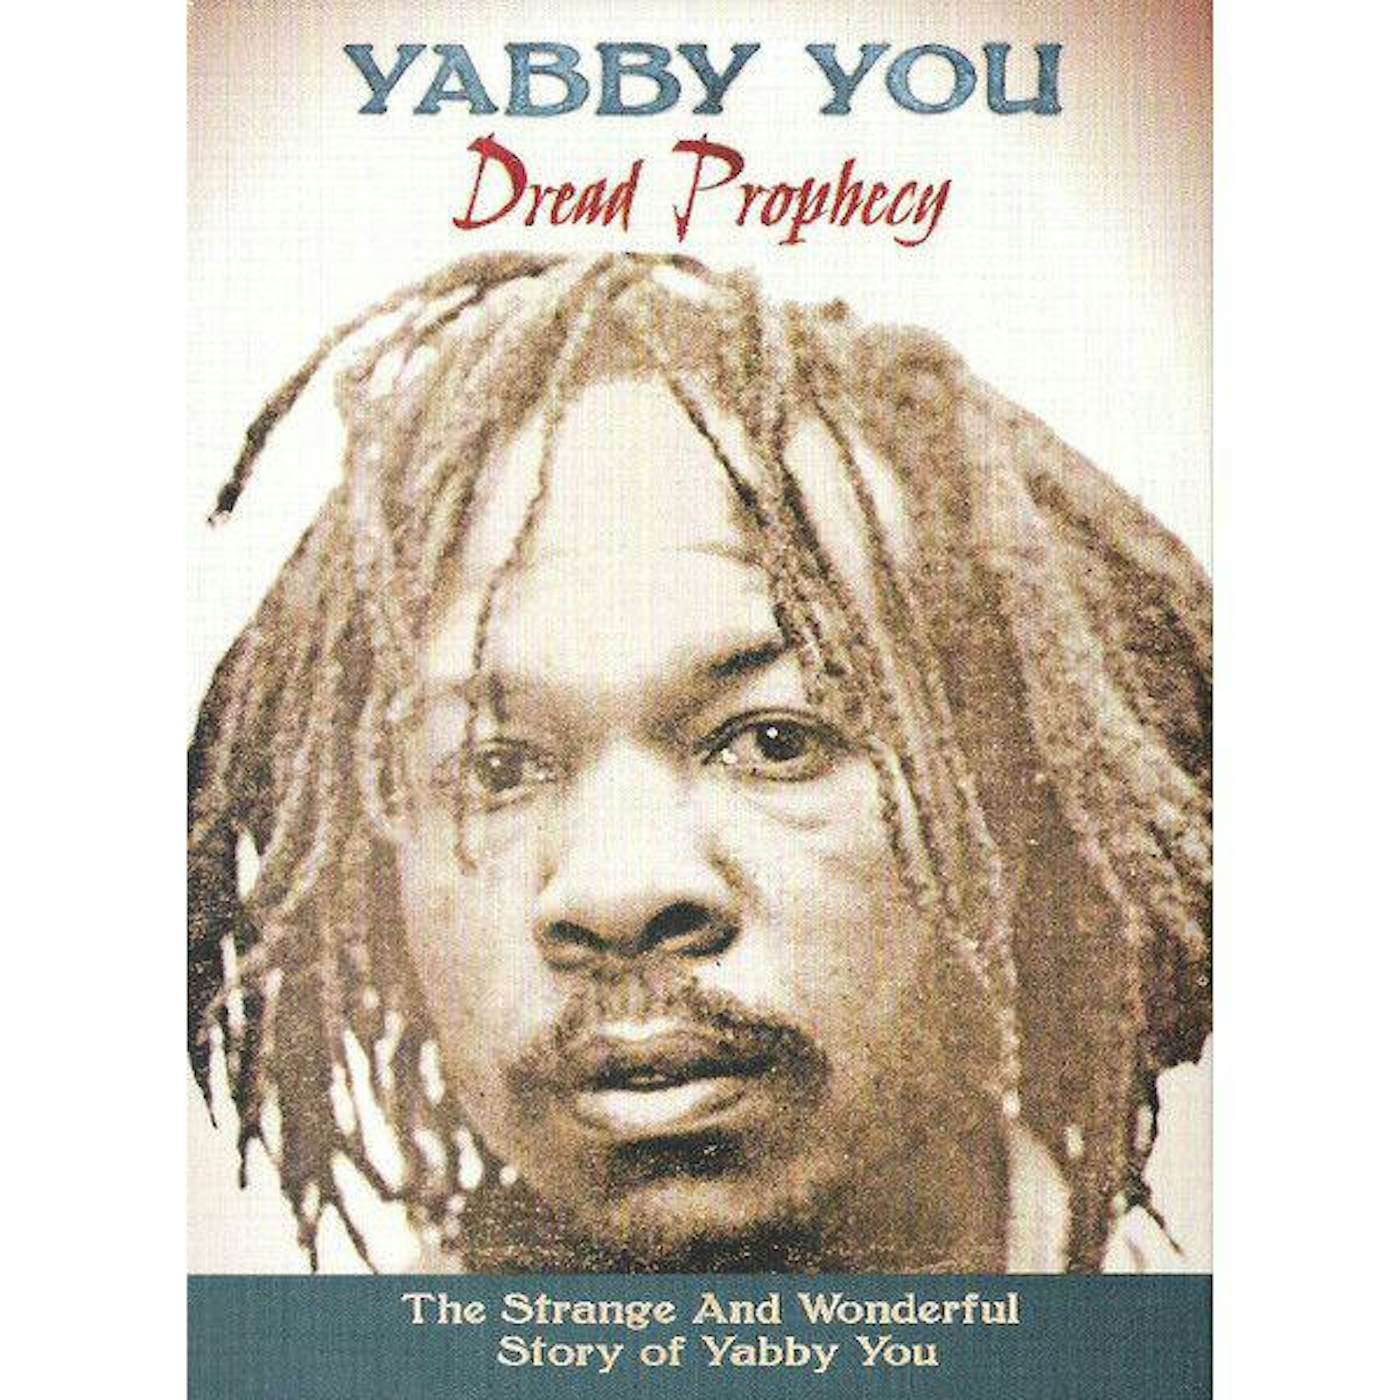 Yabby You Dread Prophecy (3CD)